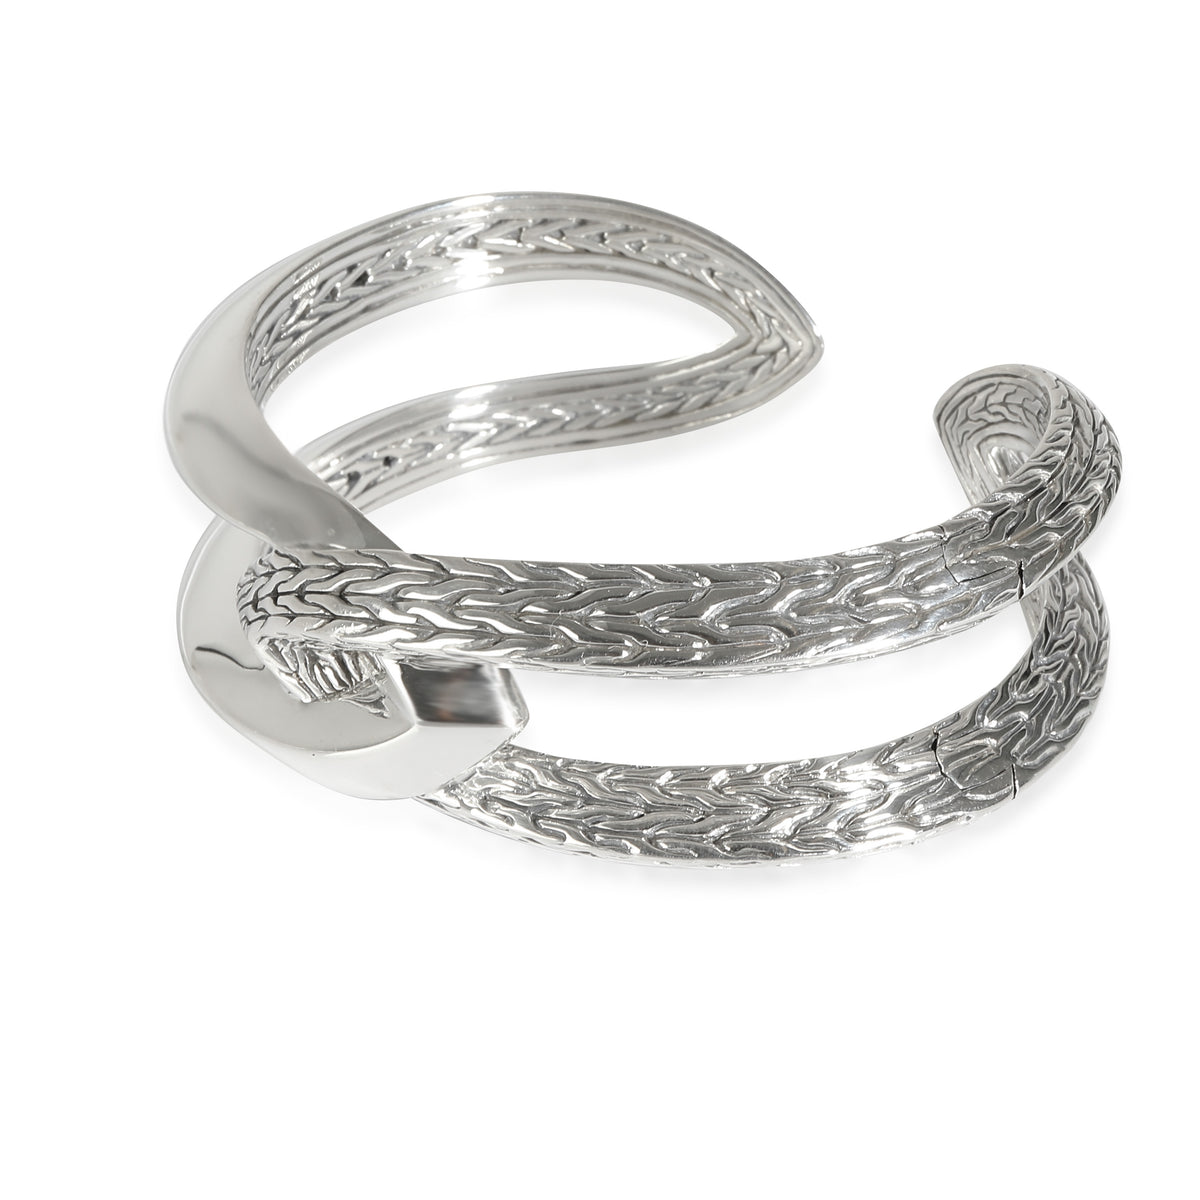 Classic Chain Cuff in Sterling Silver